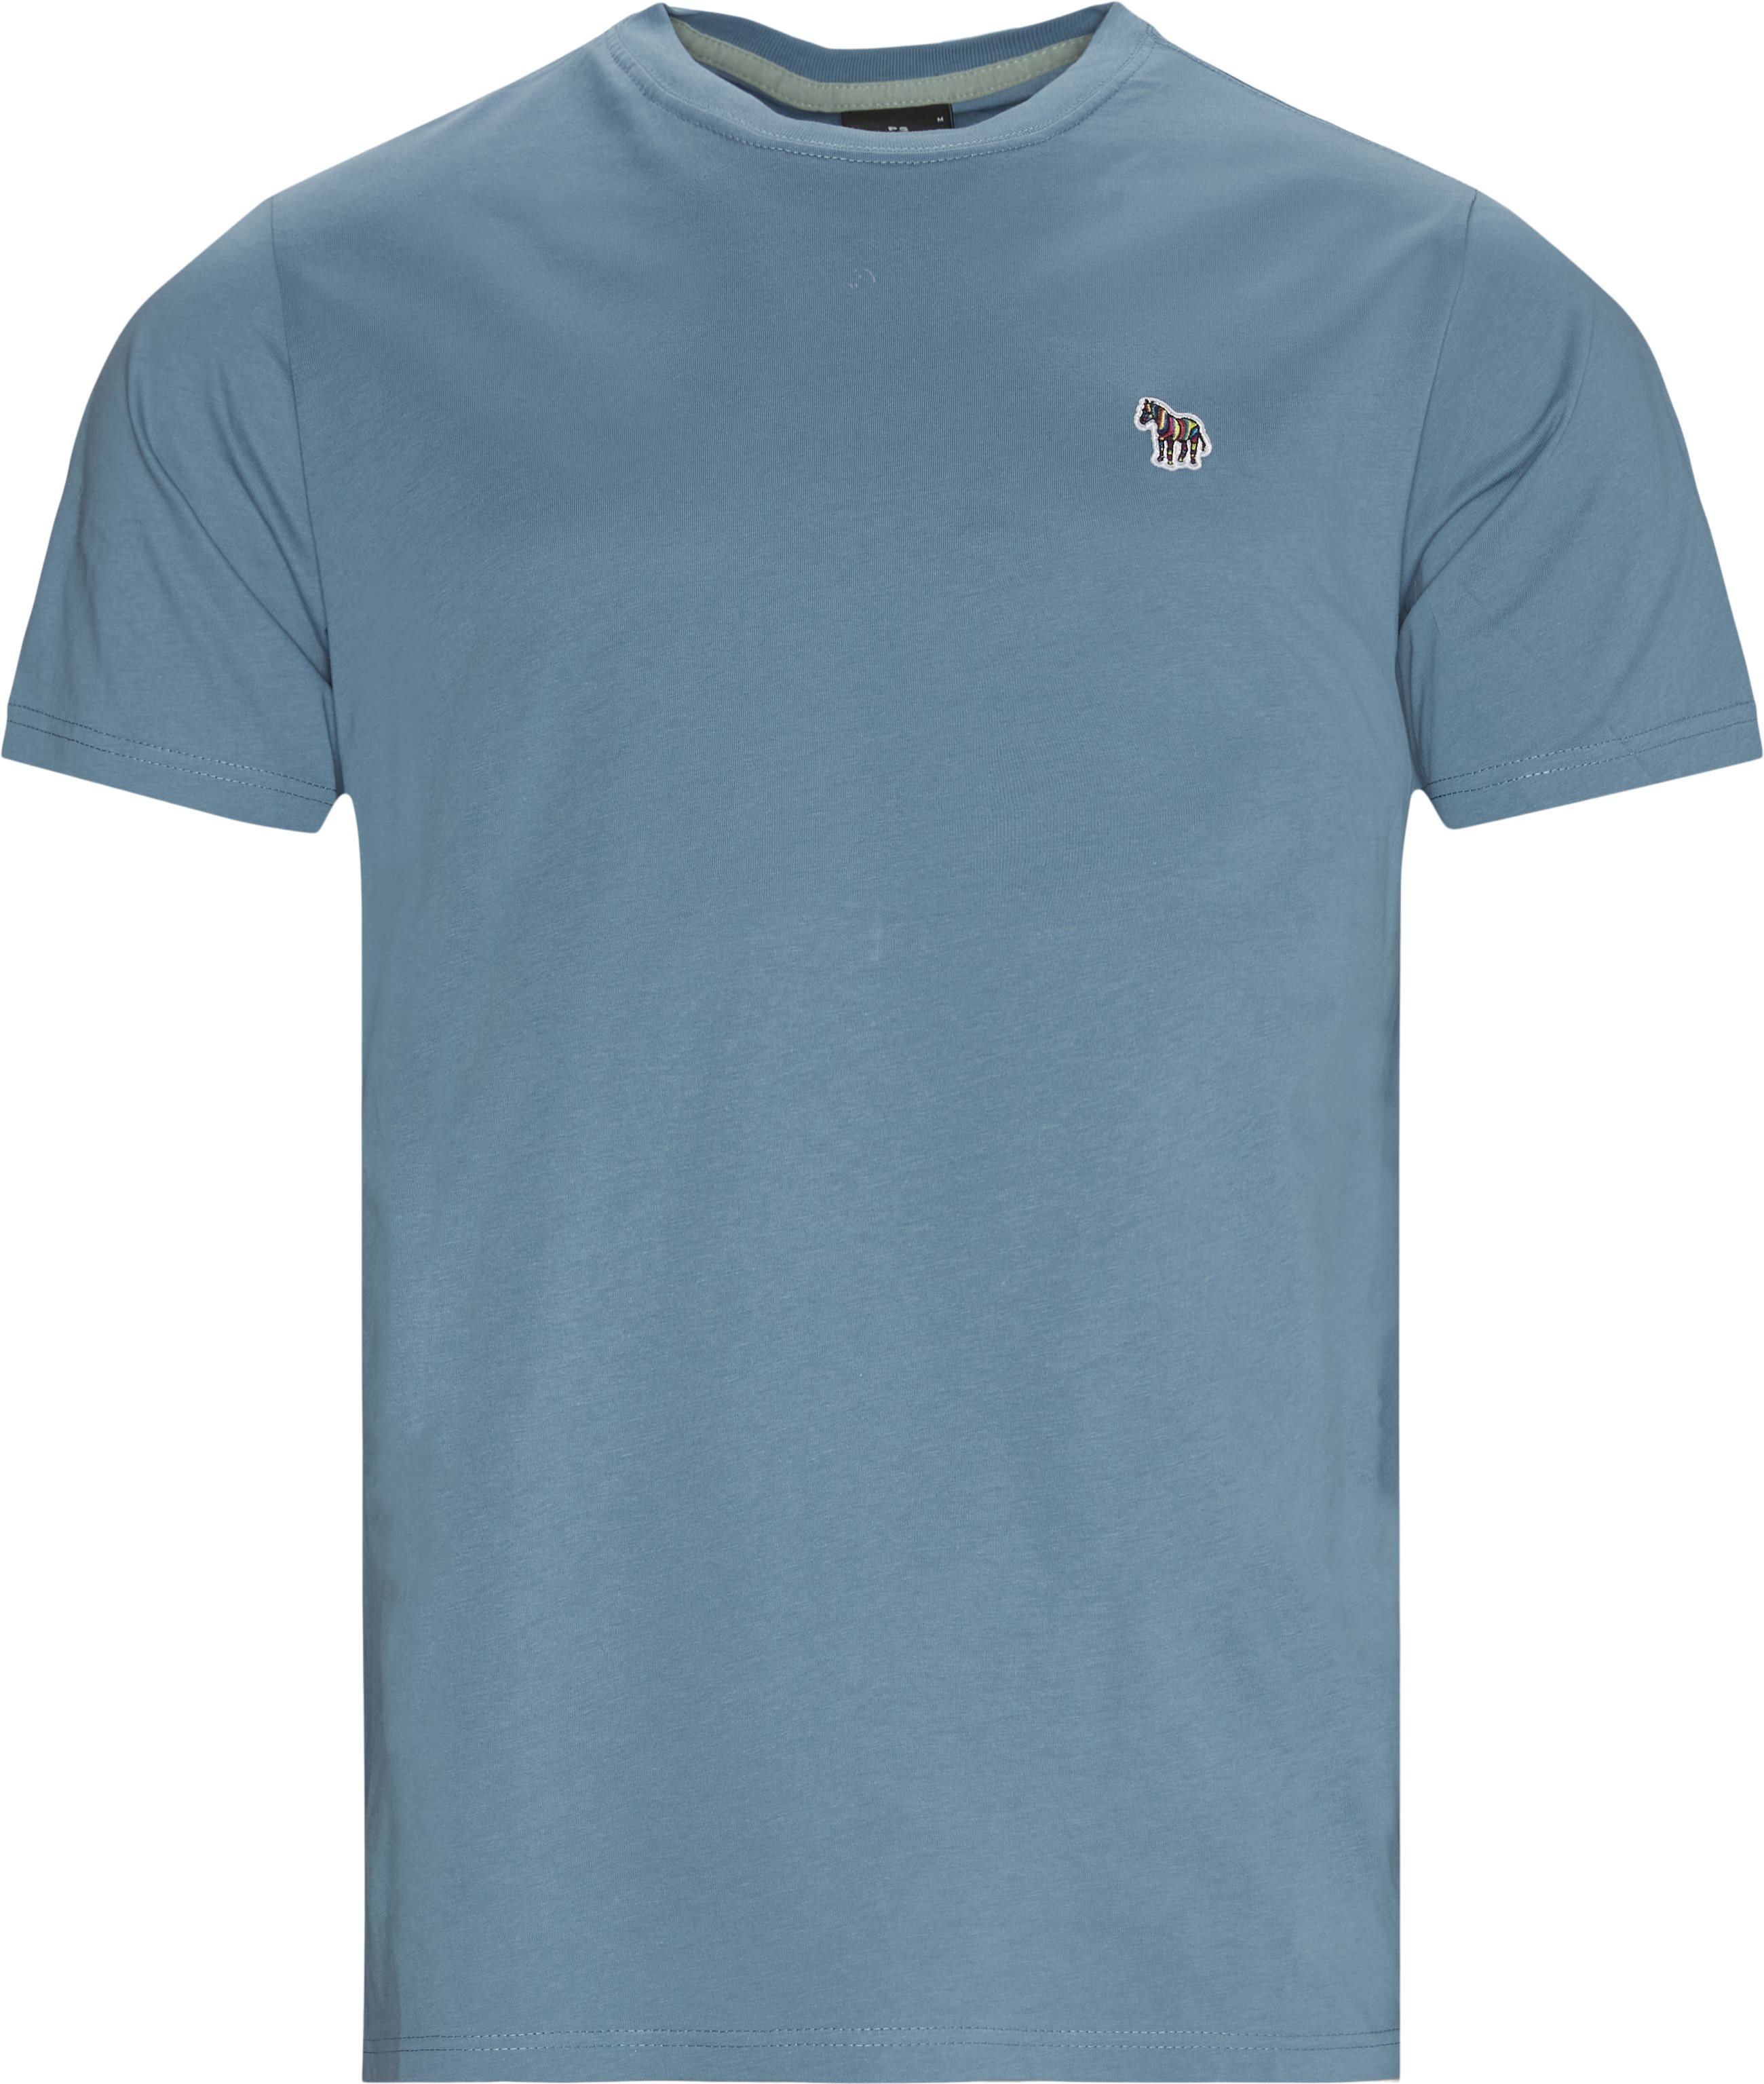 Zebra Tea - T-shirts - Regular fit - Blue